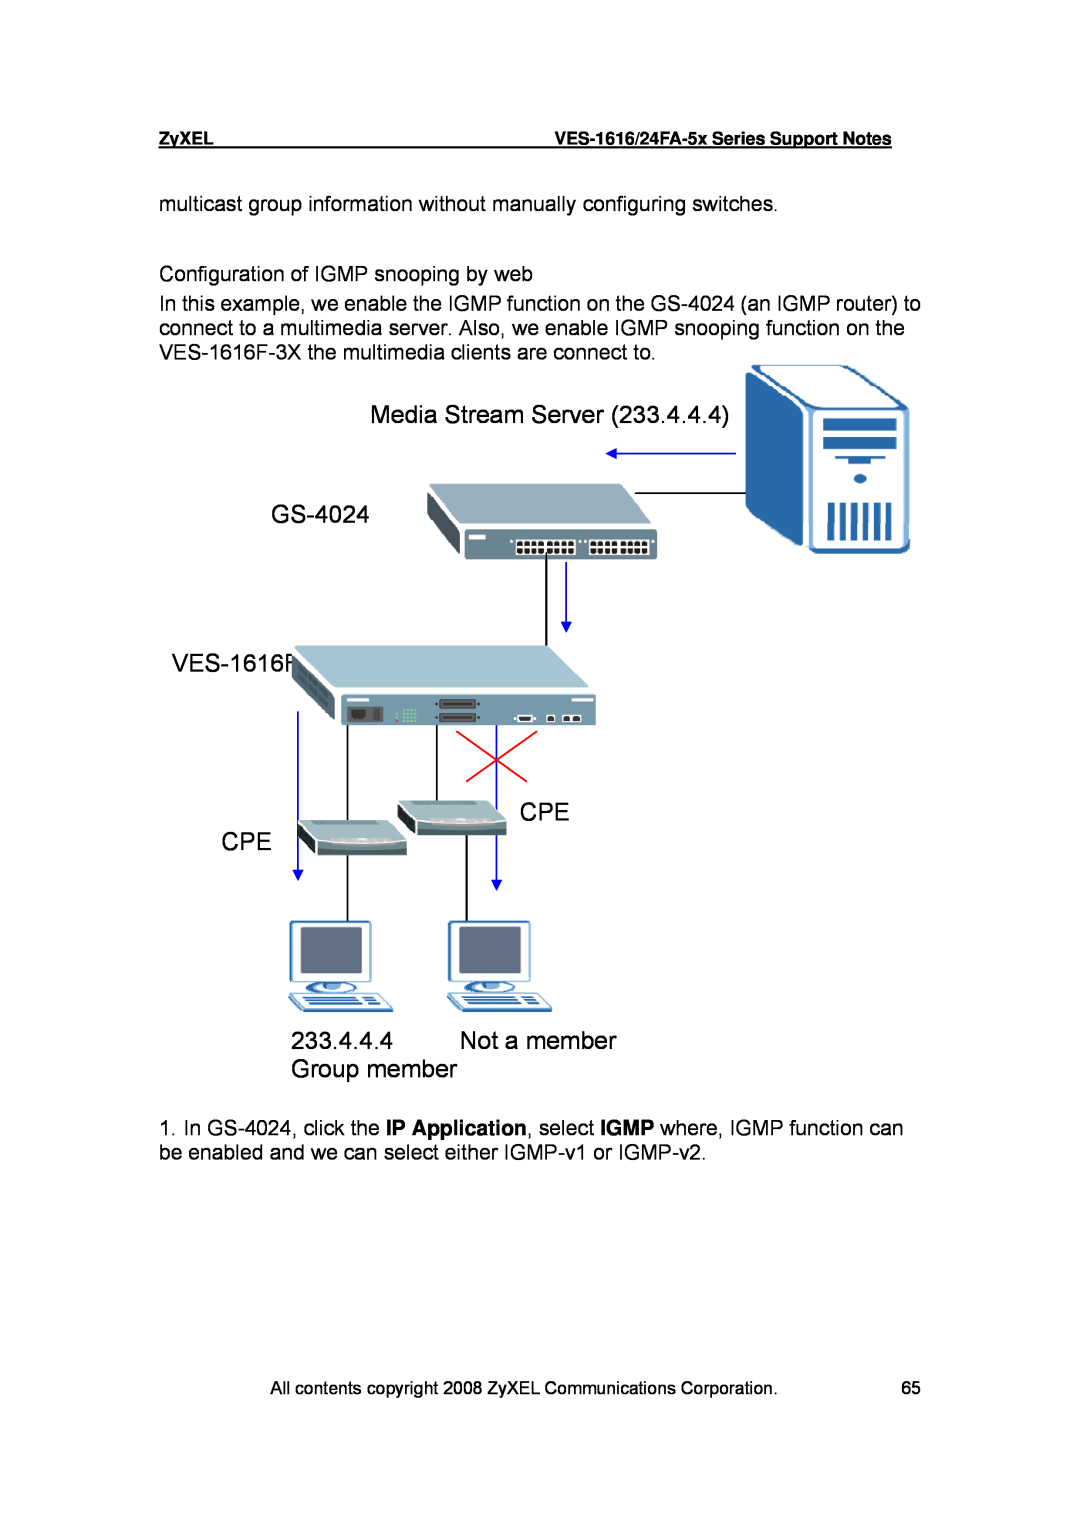 ZyXEL Communications manual Media Stream Server GS-4024 VES-1616F, Not a member Group member 